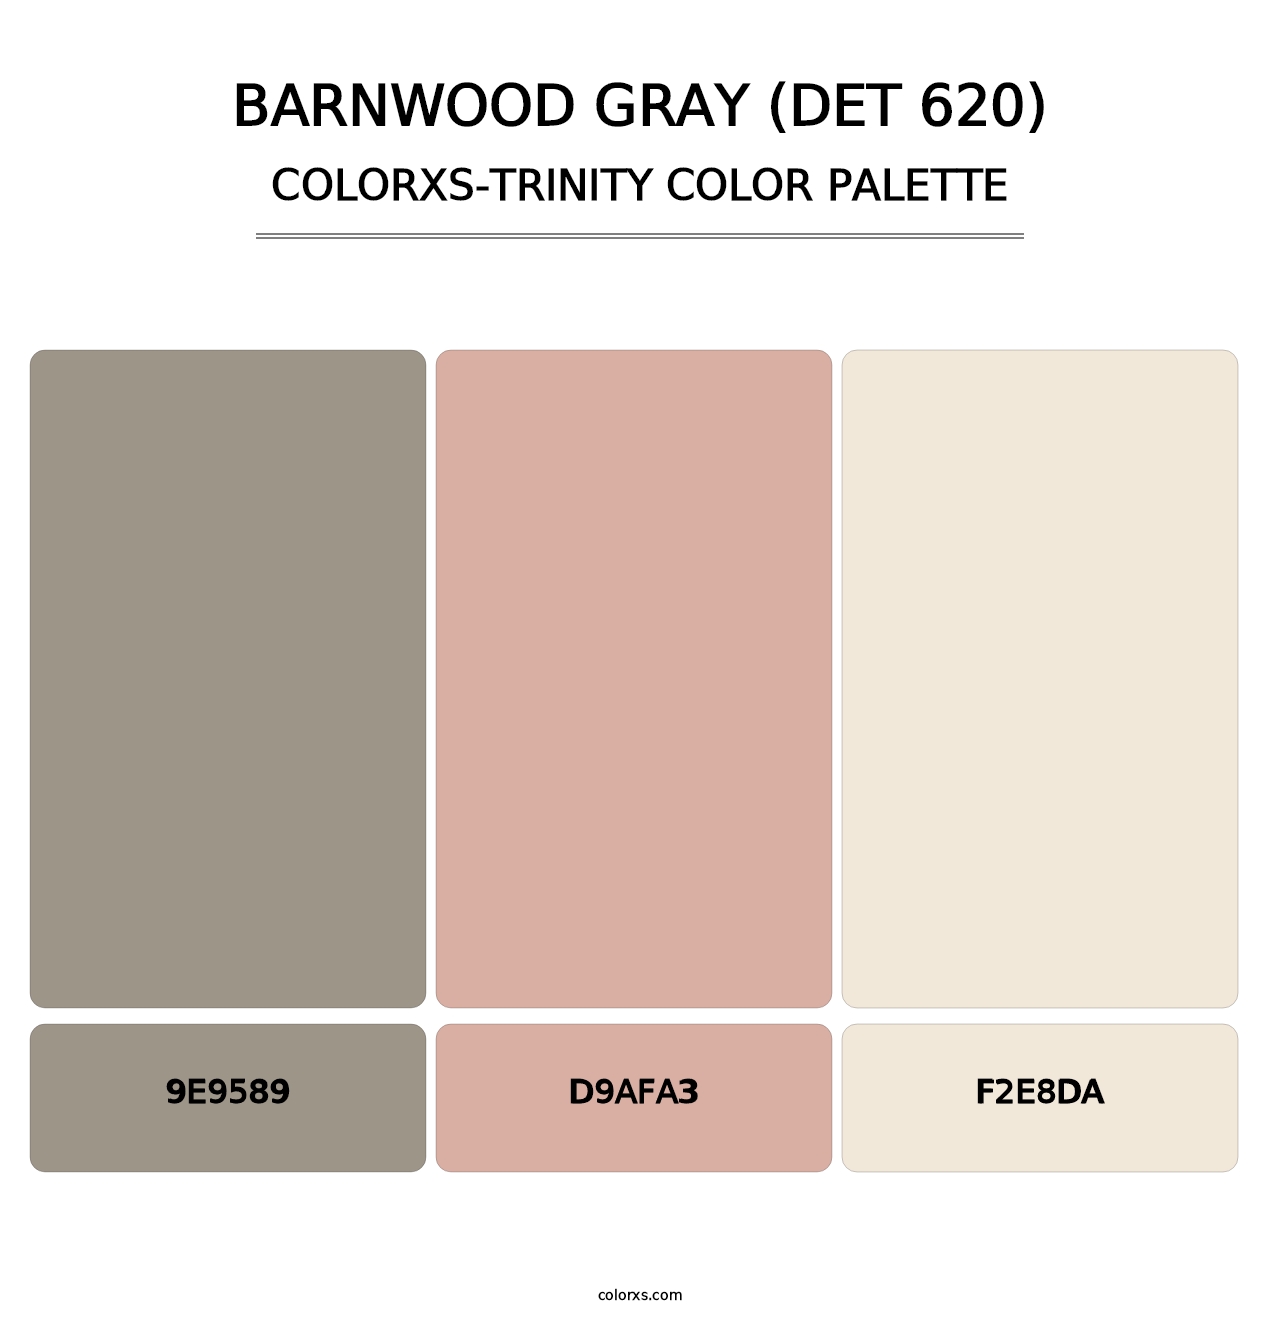 Barnwood Gray (DET 620) - Colorxs Trinity Palette